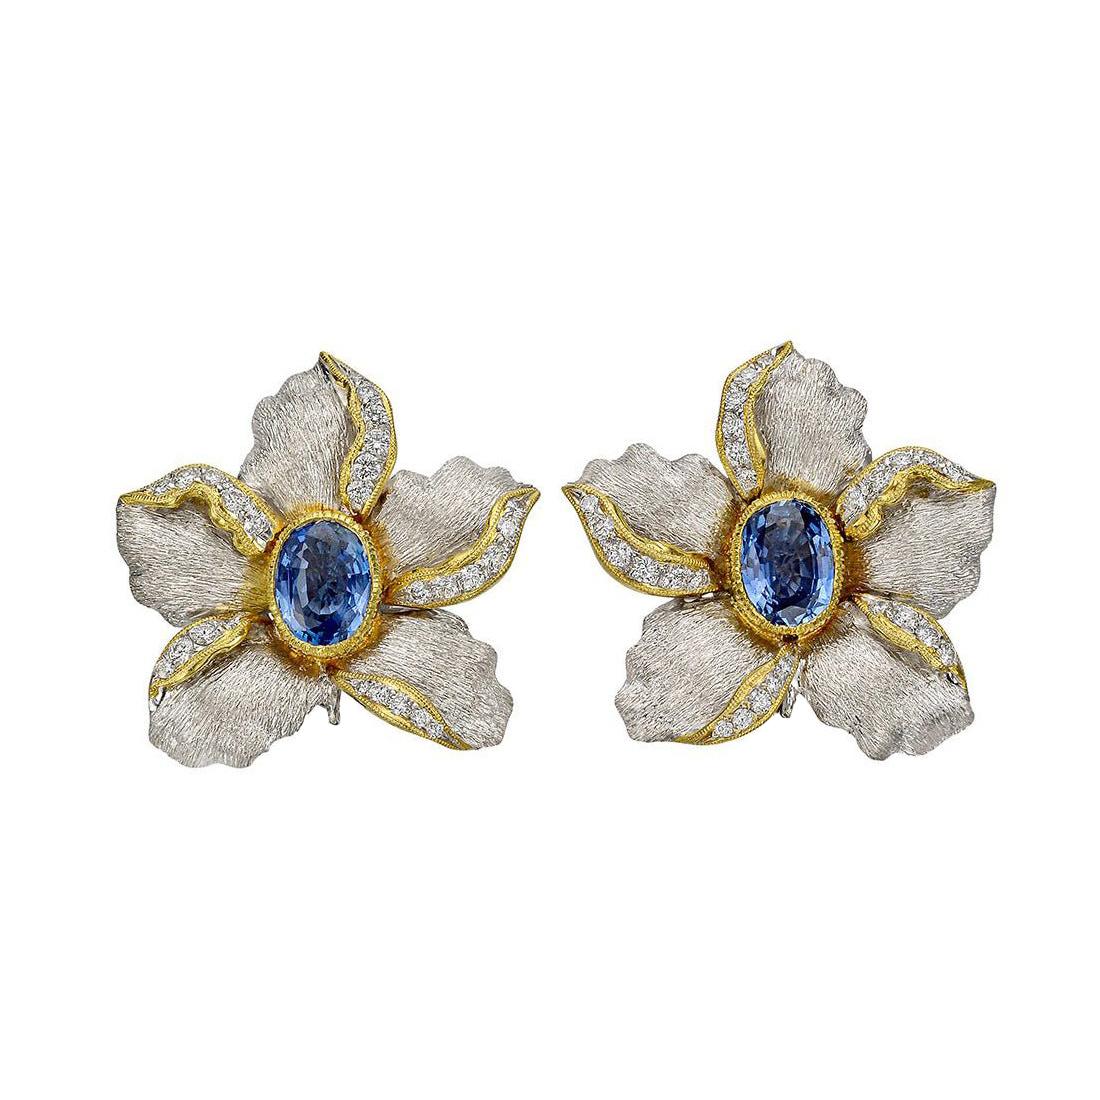 Brilliant Cut Sapphire Diamond Flower Earrings with Pearl Drops